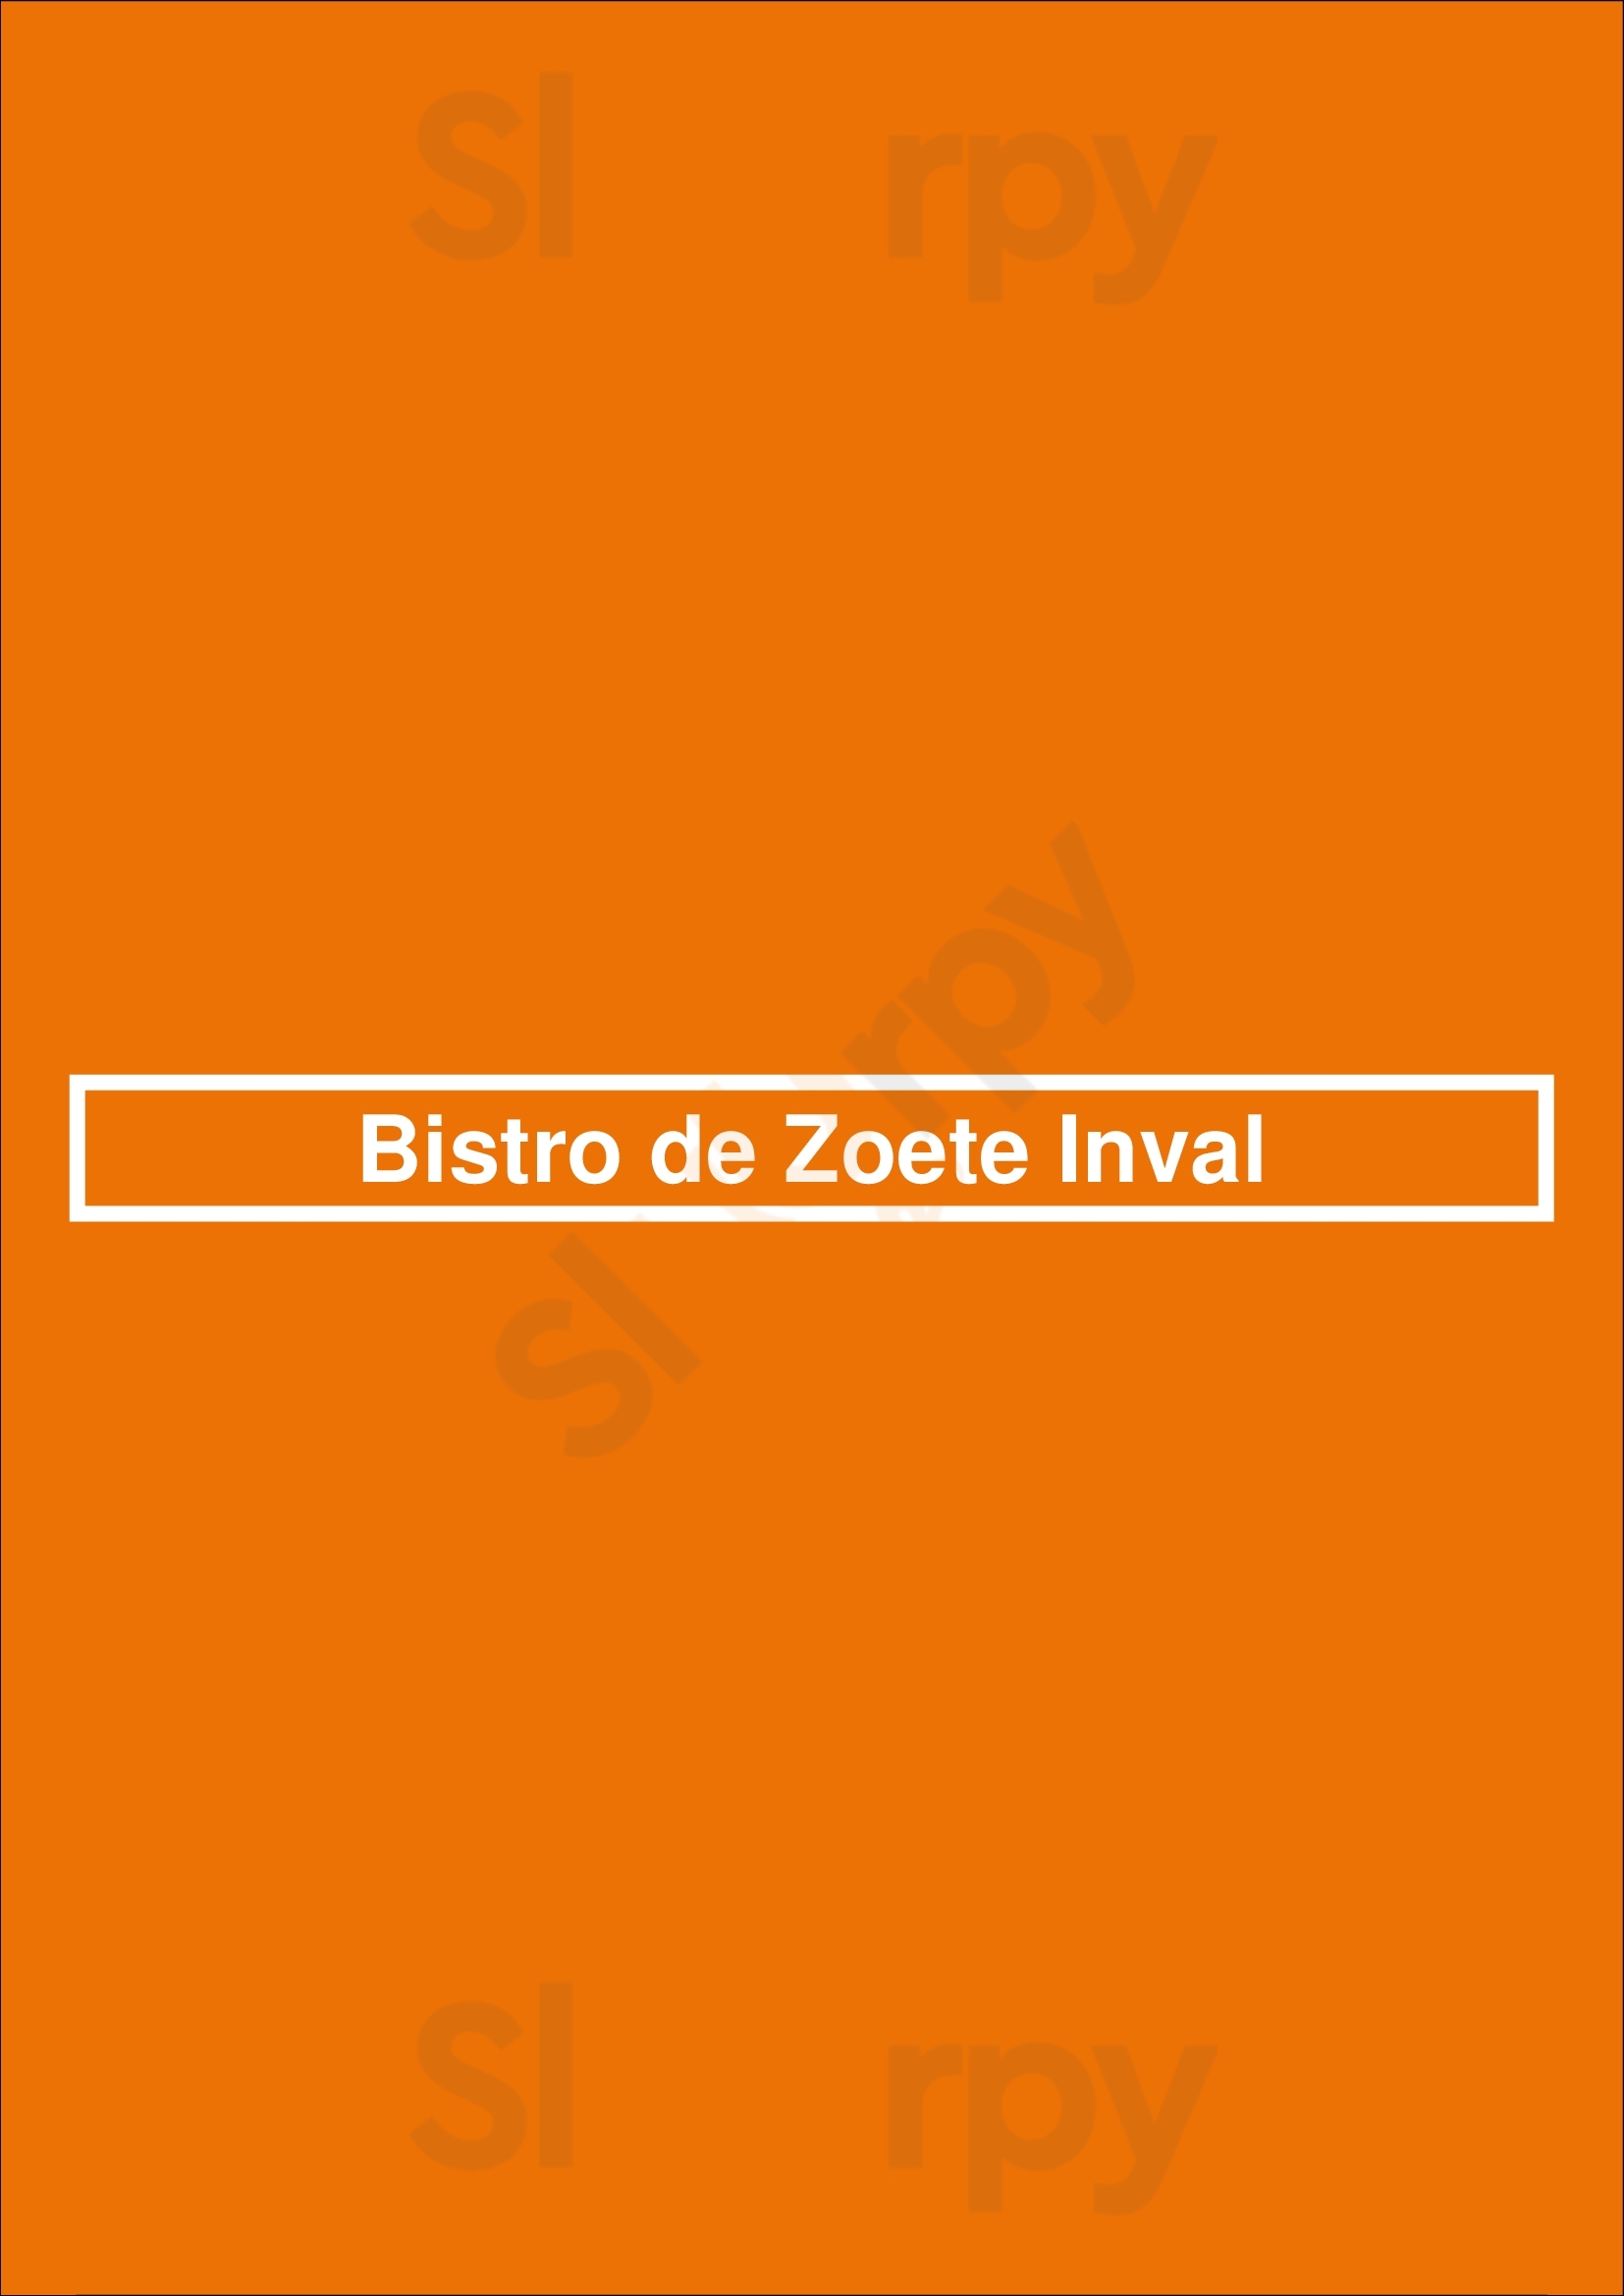 Bistro De Zoete Inval Zwolle Menu - 1